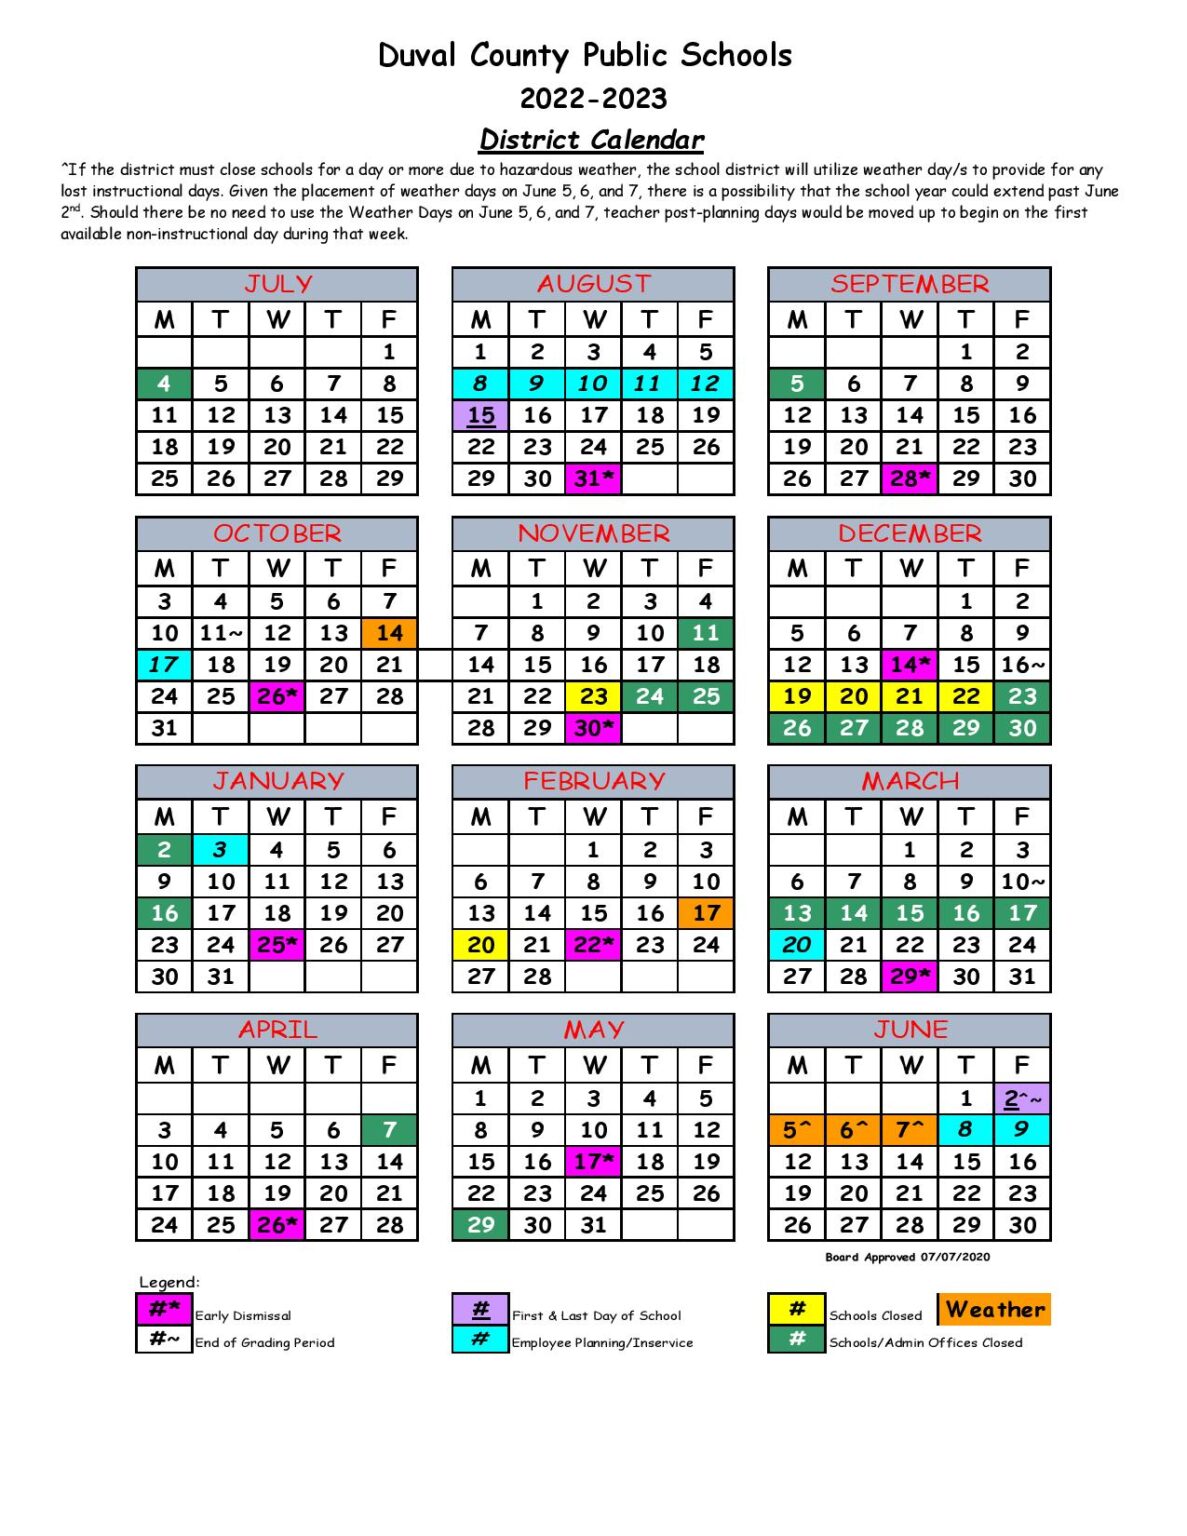 duval-county-public-school-calendar-2022-to-2022-2023-schoolcalendars